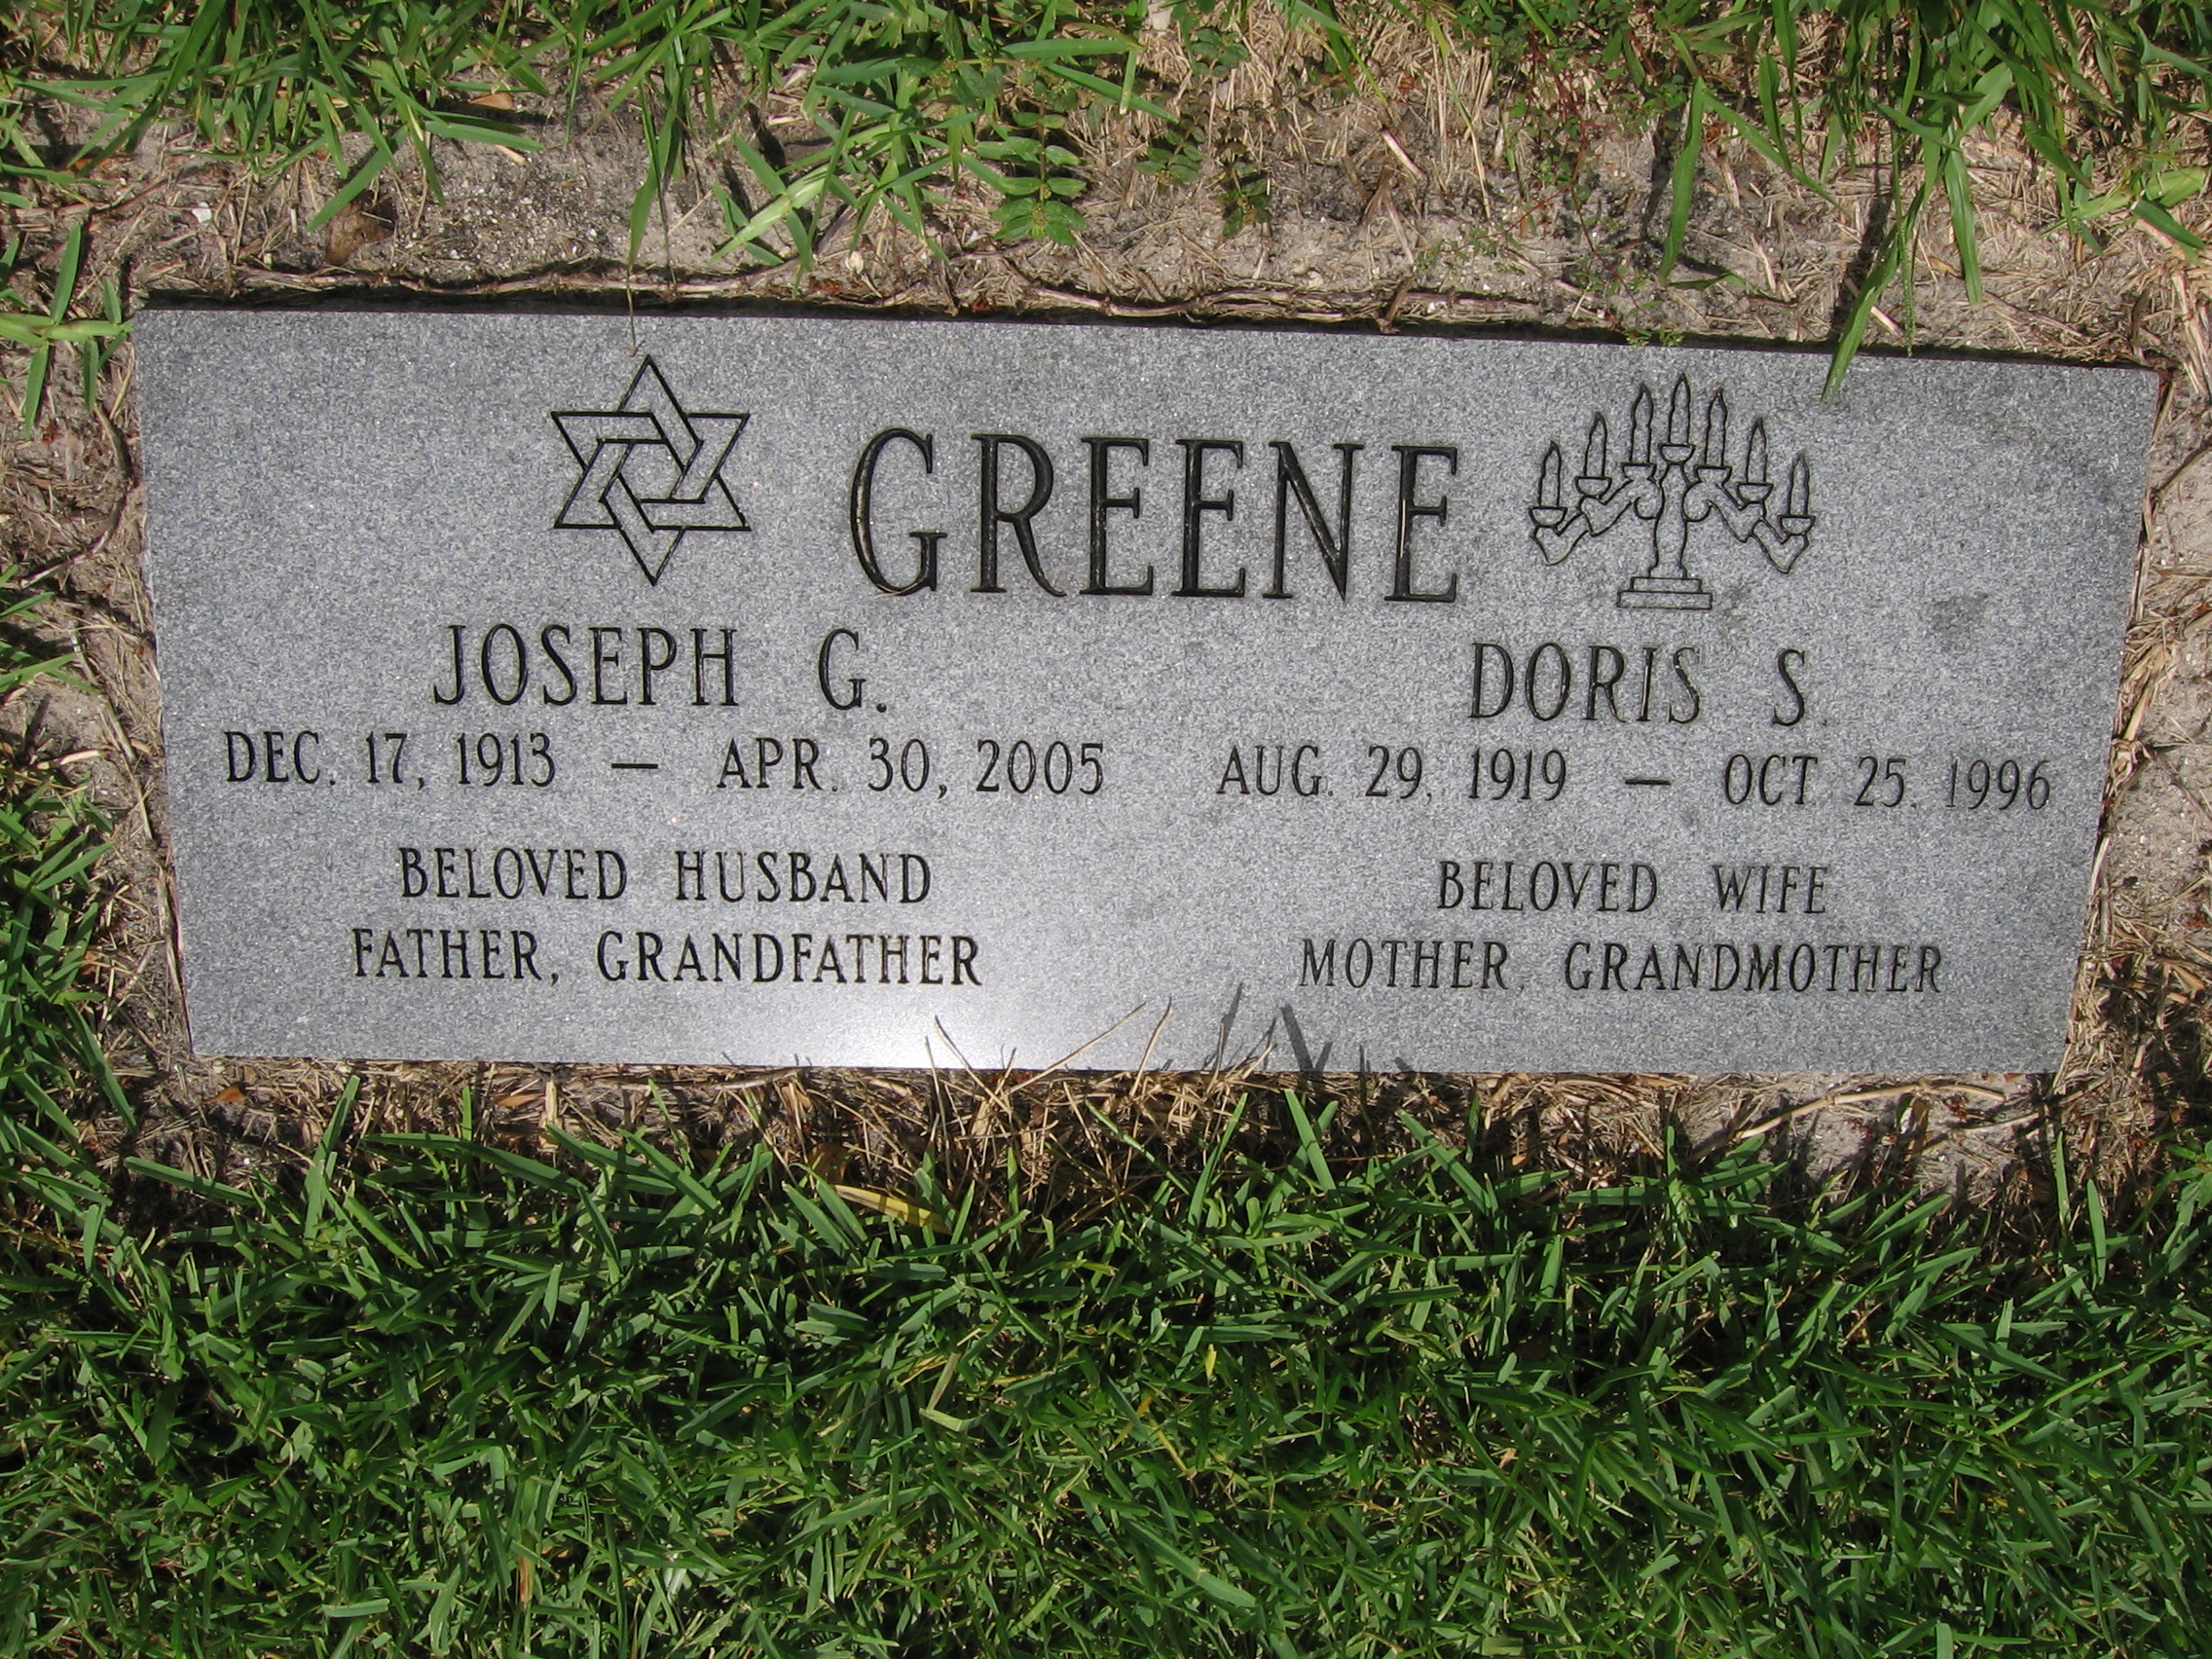 Joseph G Greene